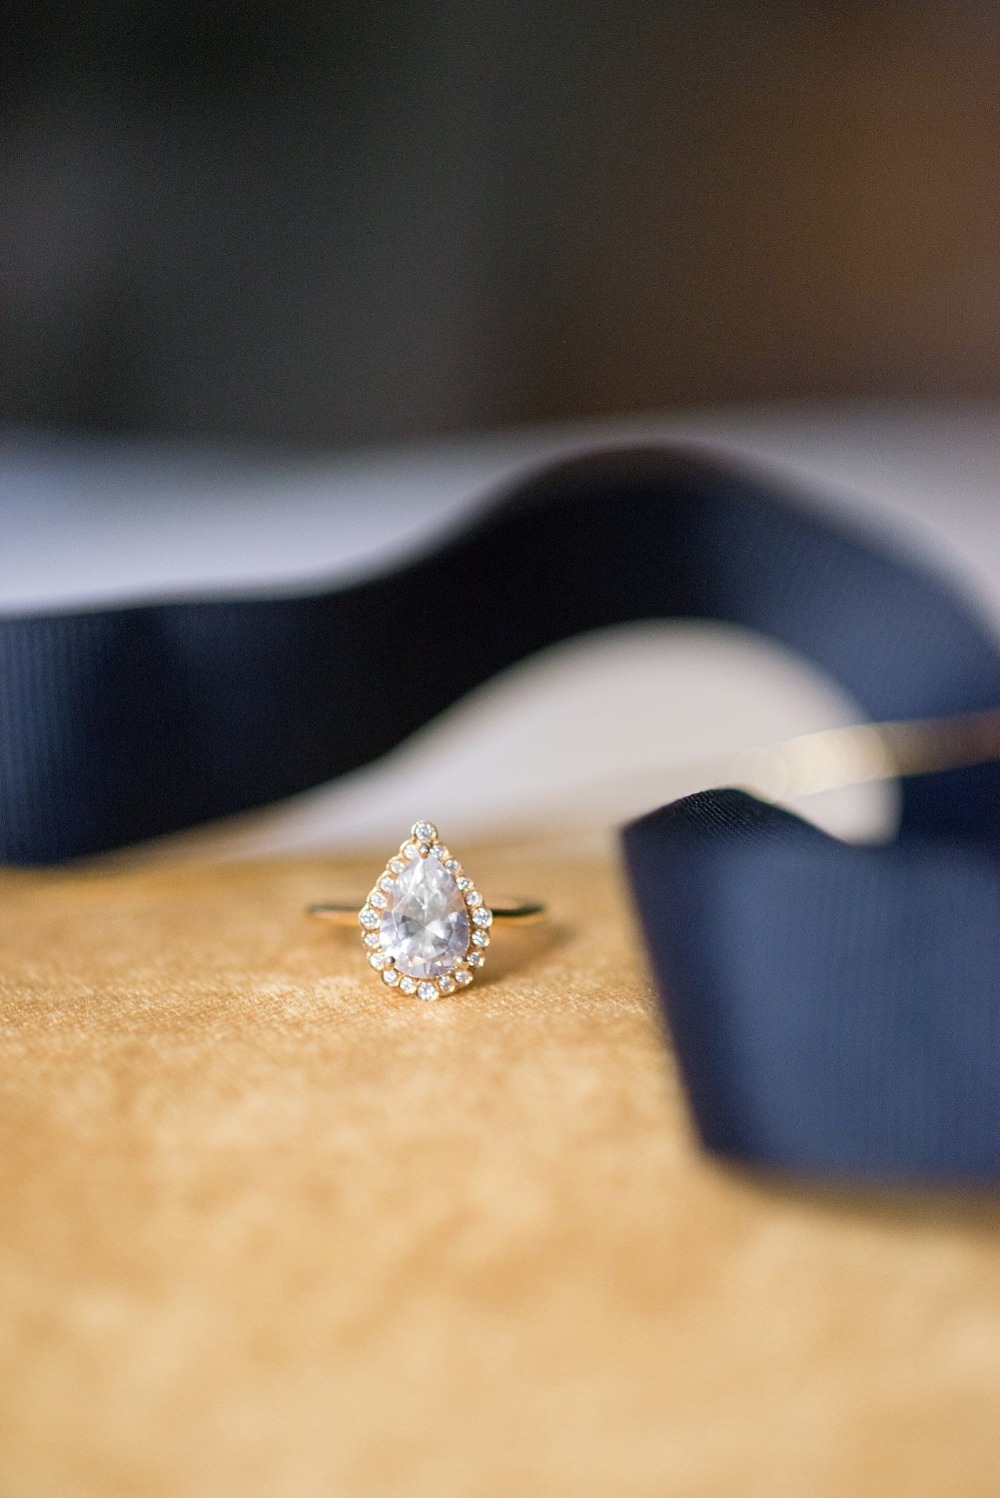 Pear shaped diamond wedding ring